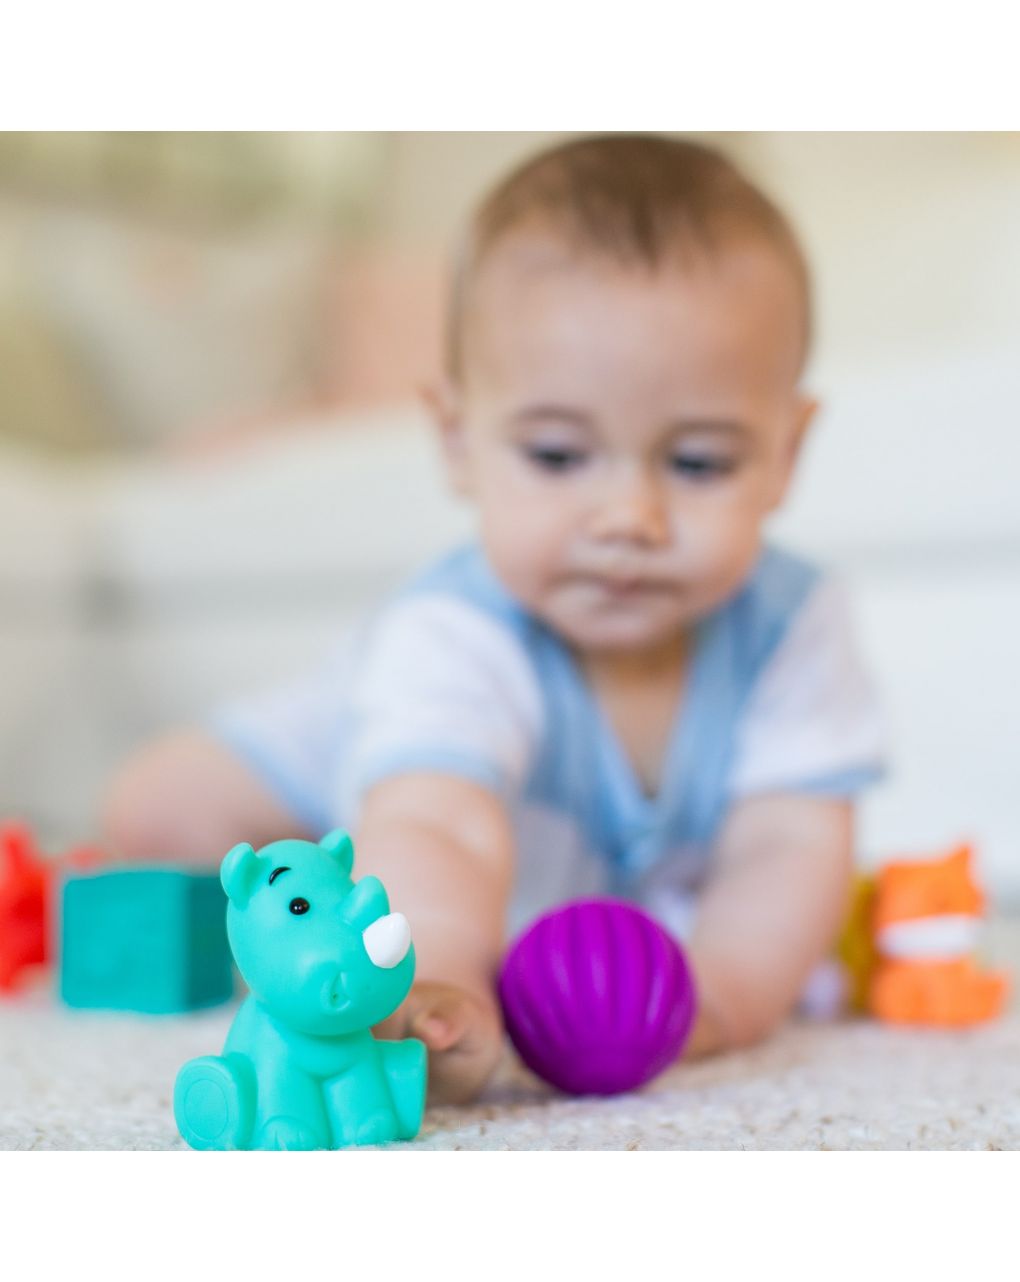 Infantino - set juguetes sensoriales multi textura - INFANTINO